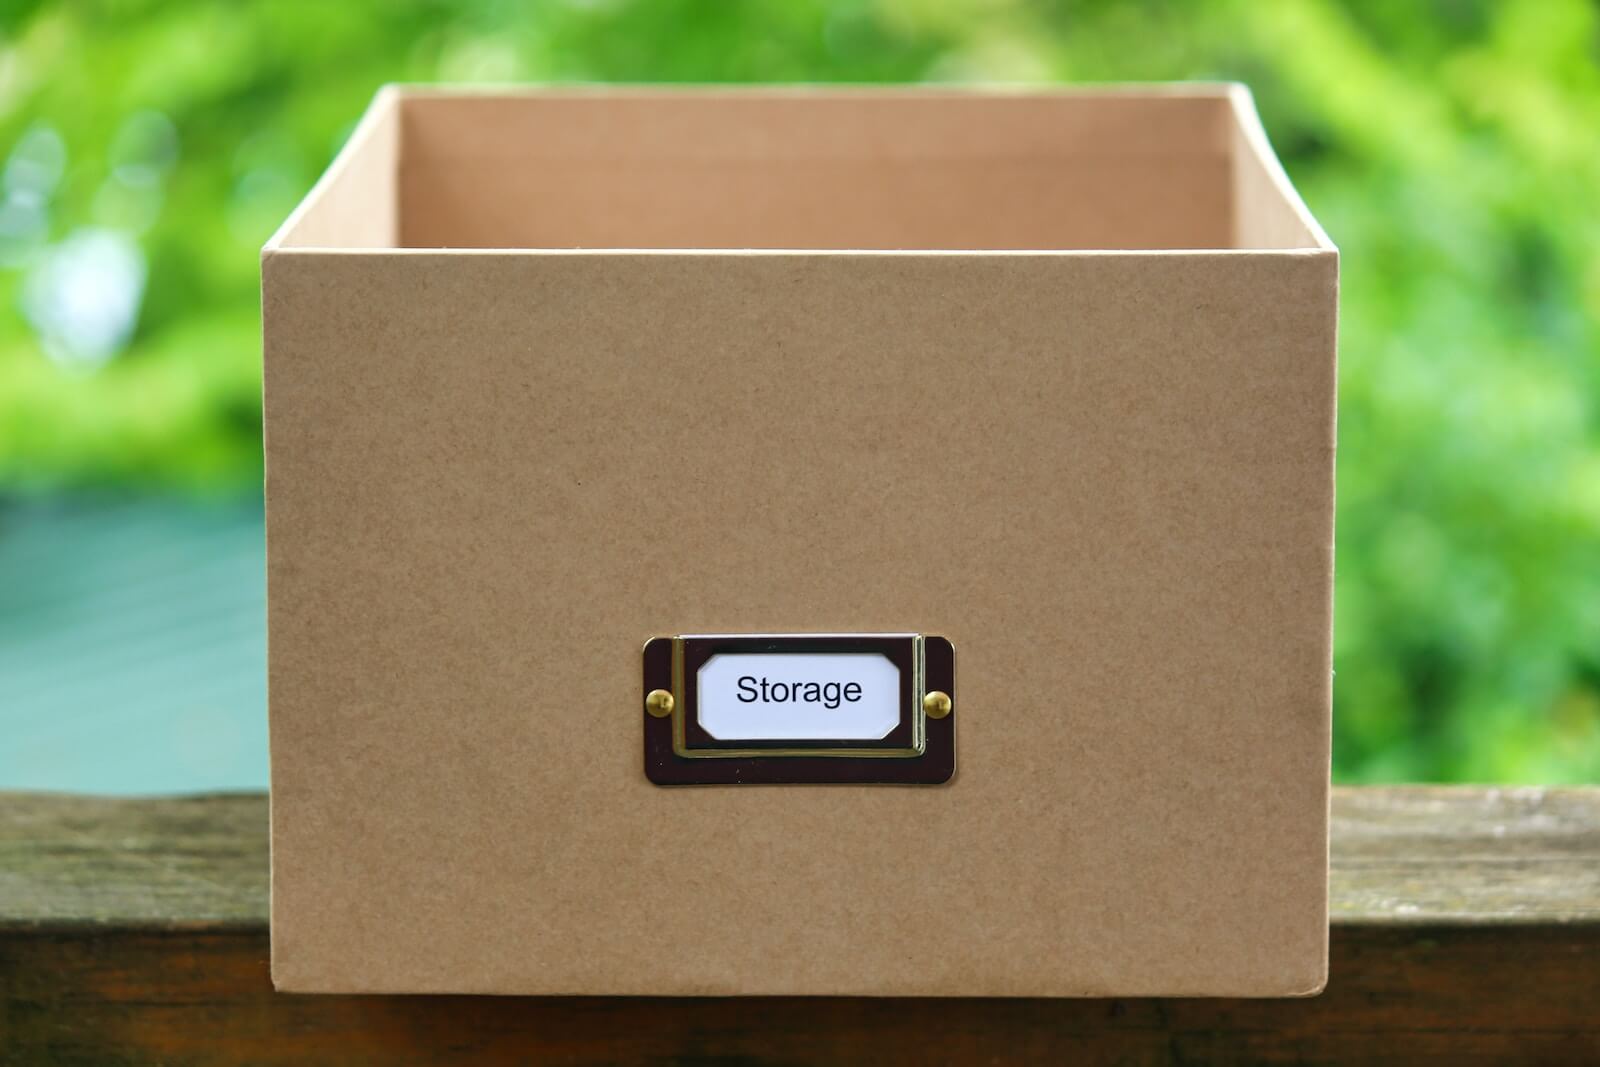 Portable Nail Dust Box Space-saving Press on Nail Storage Box